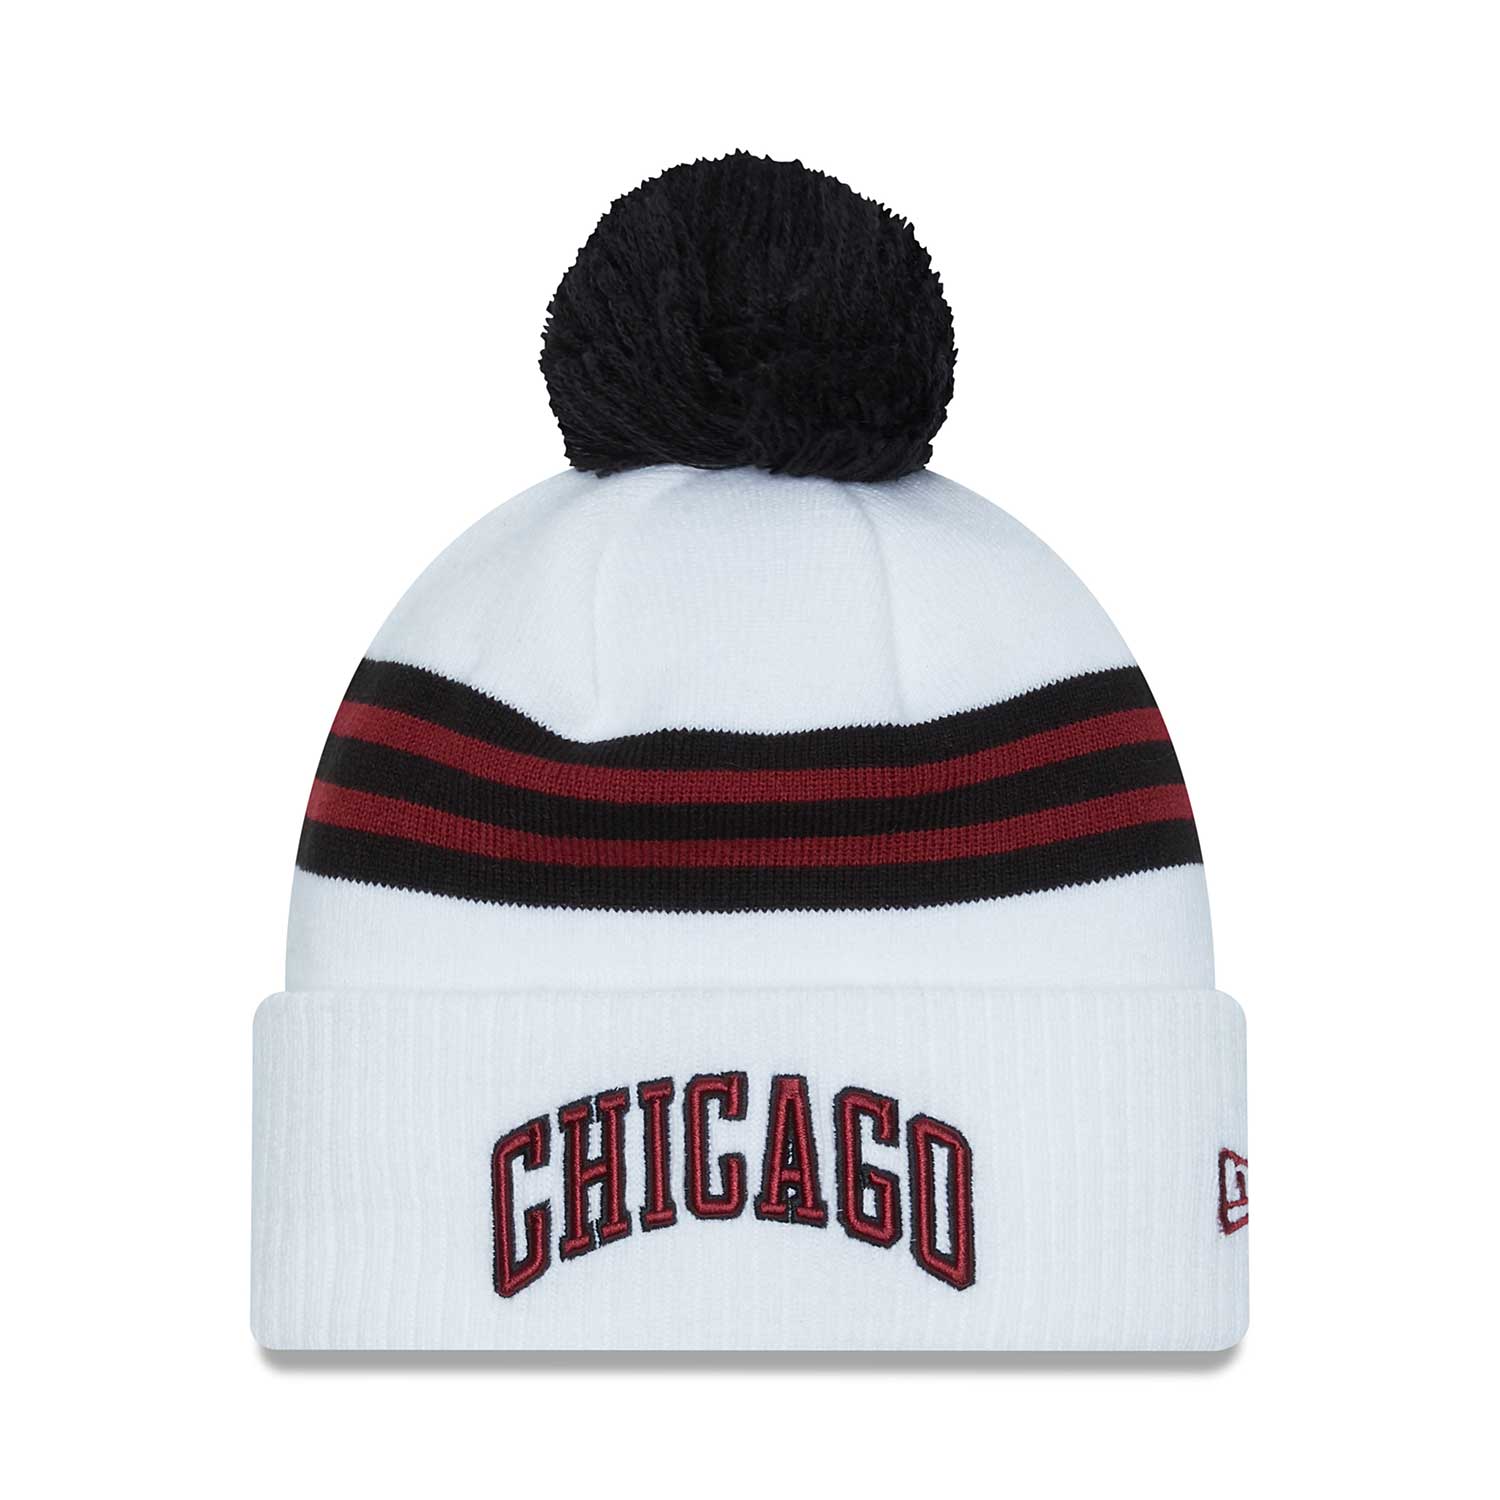 Chicago Bulls New Era Beanie Hat